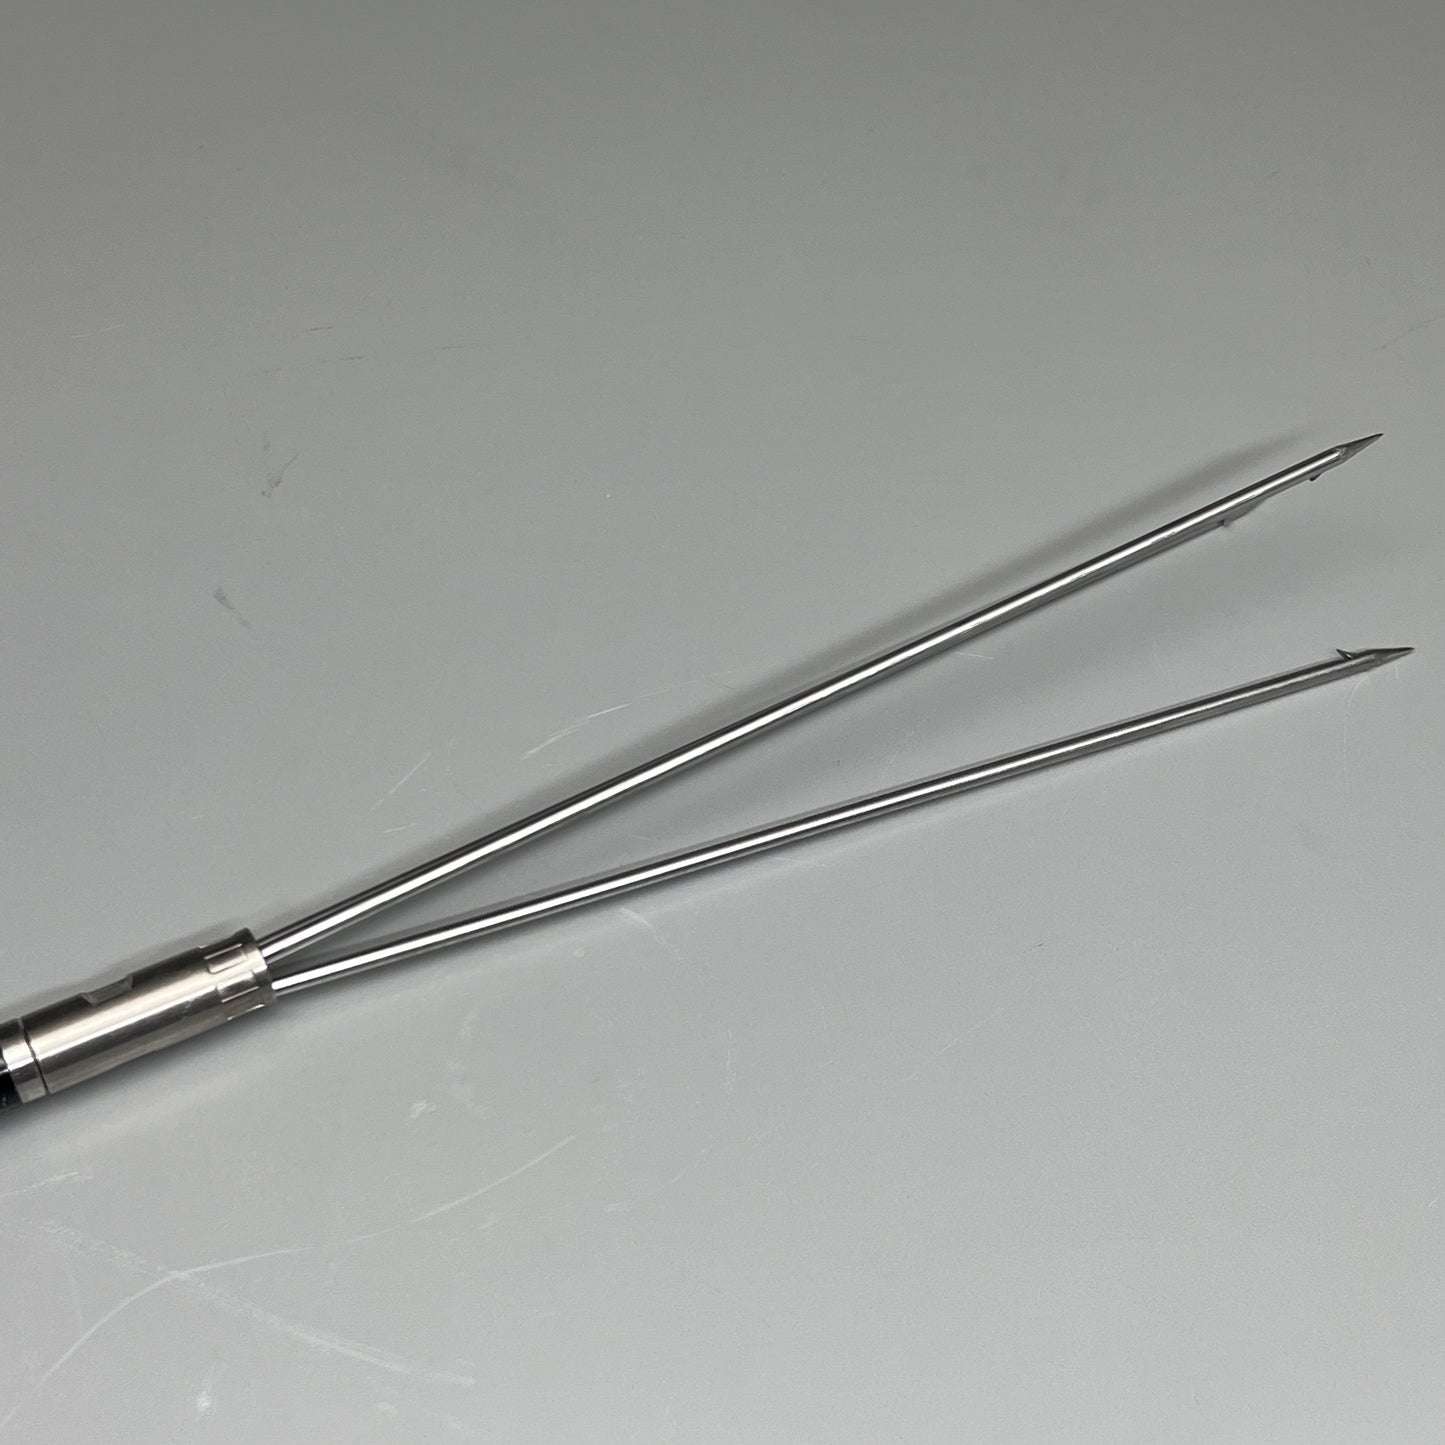 CRESSI Aluminum Pole Spear w/ Paralyzer Tip 3pcs - 6.0 ft Black USX040000 (New)